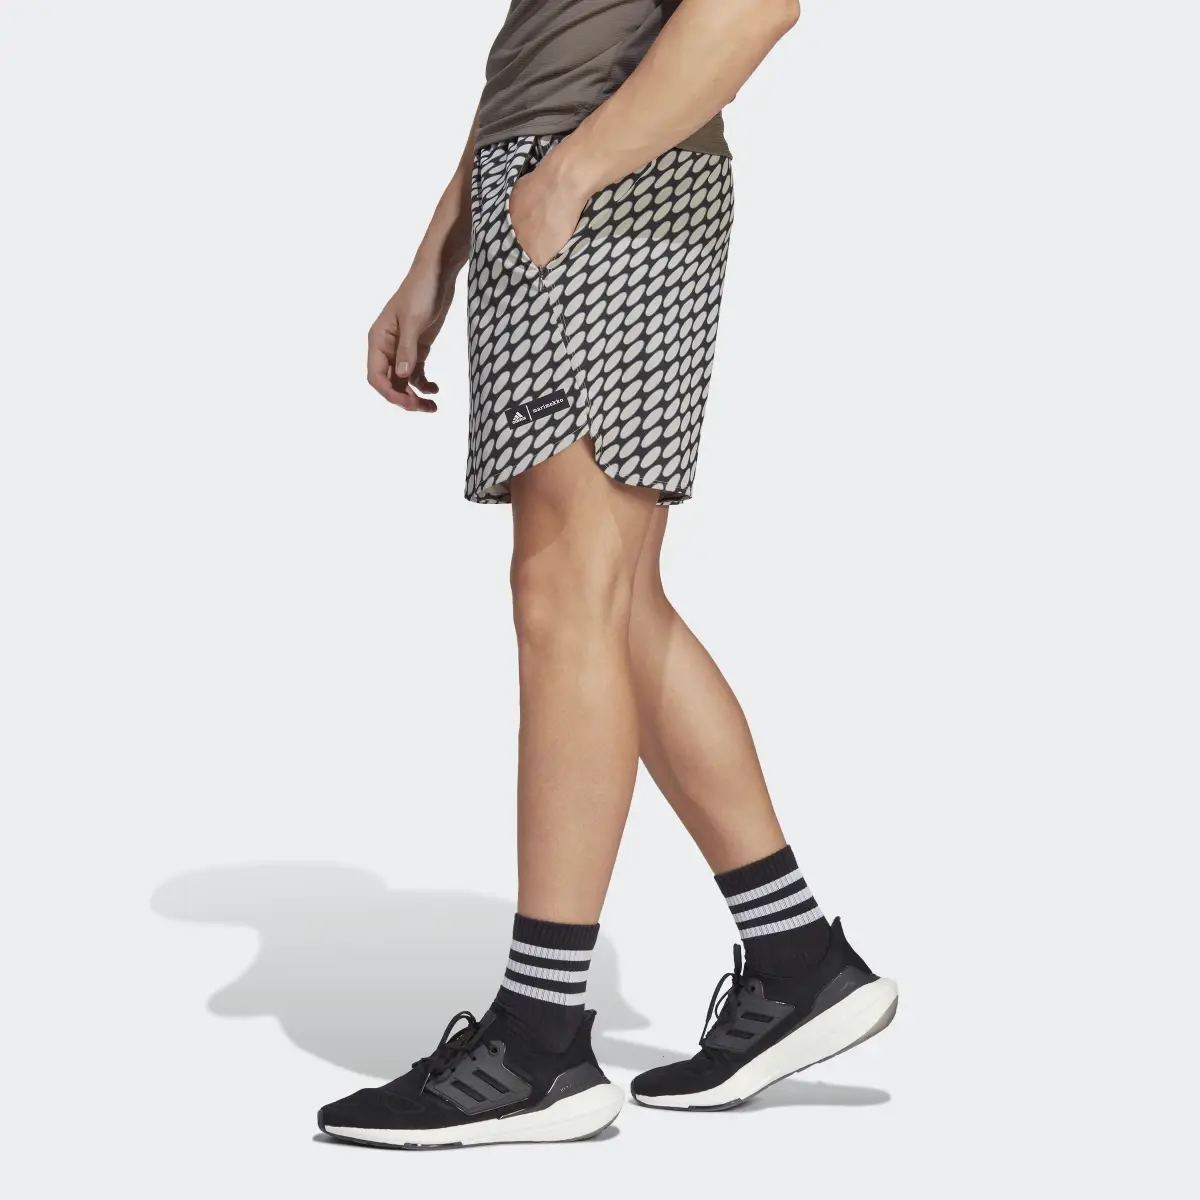 Adidas Short adidas x Marimekko Designed for Training. 2